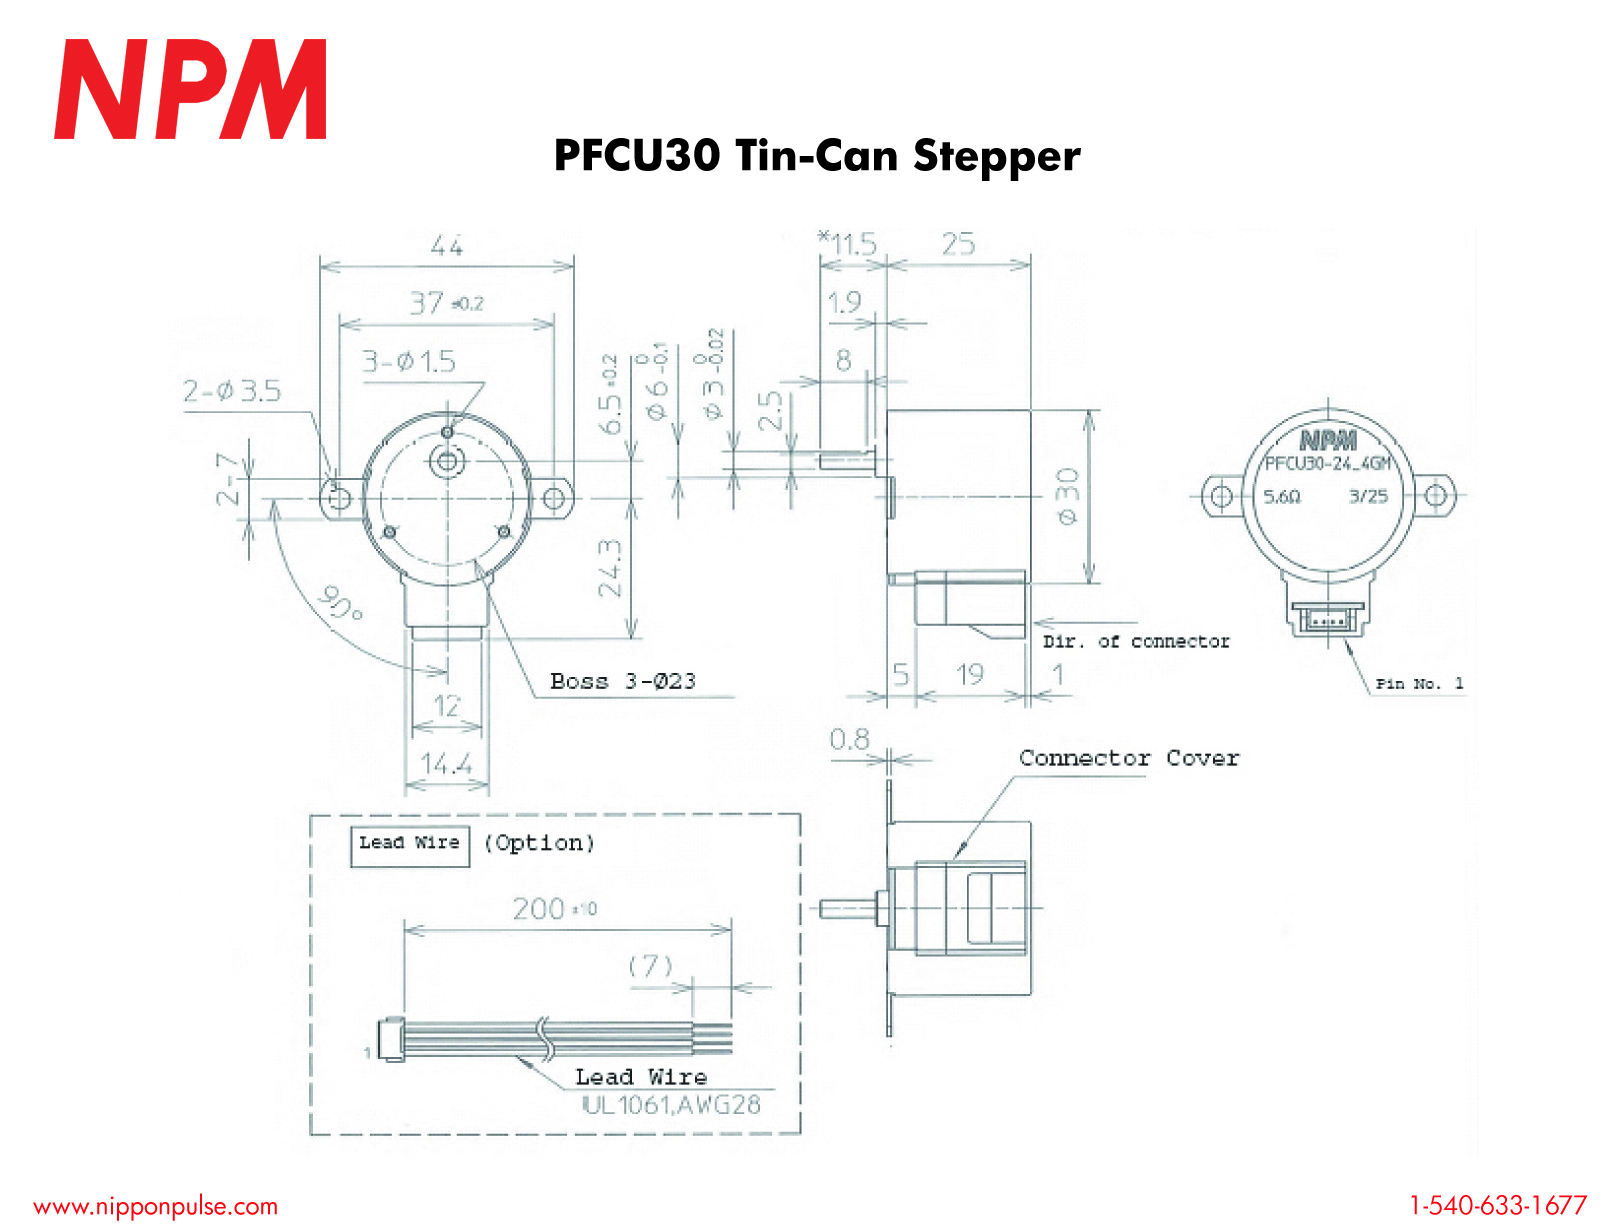 PFCU30-24V system drawing